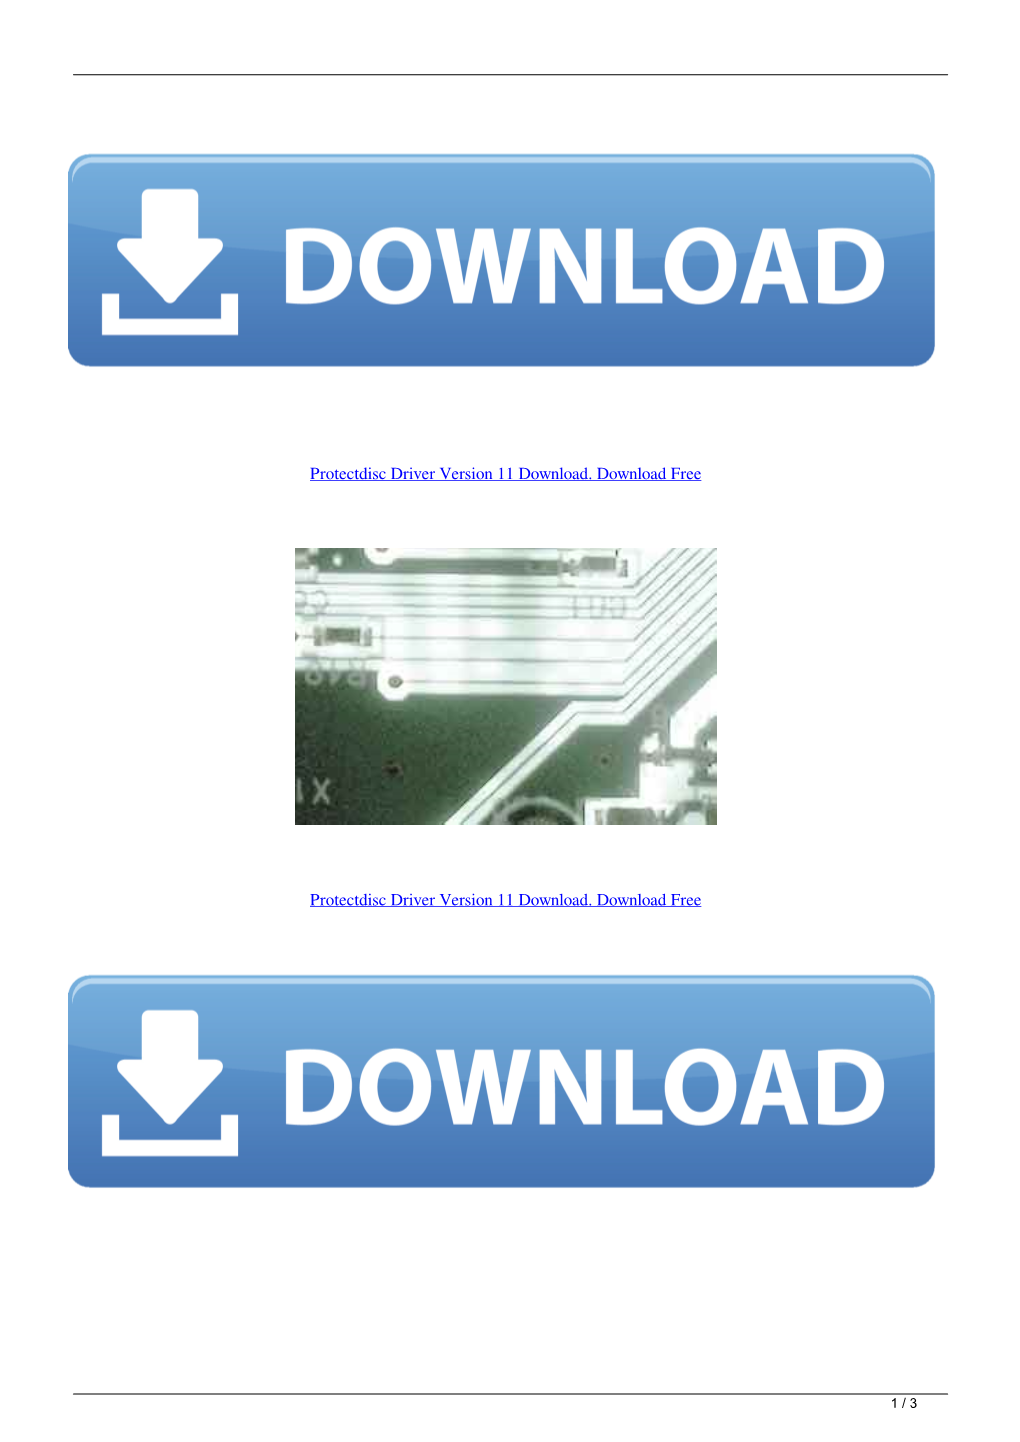 Protectdisc Driver Version 11 Download Download Free